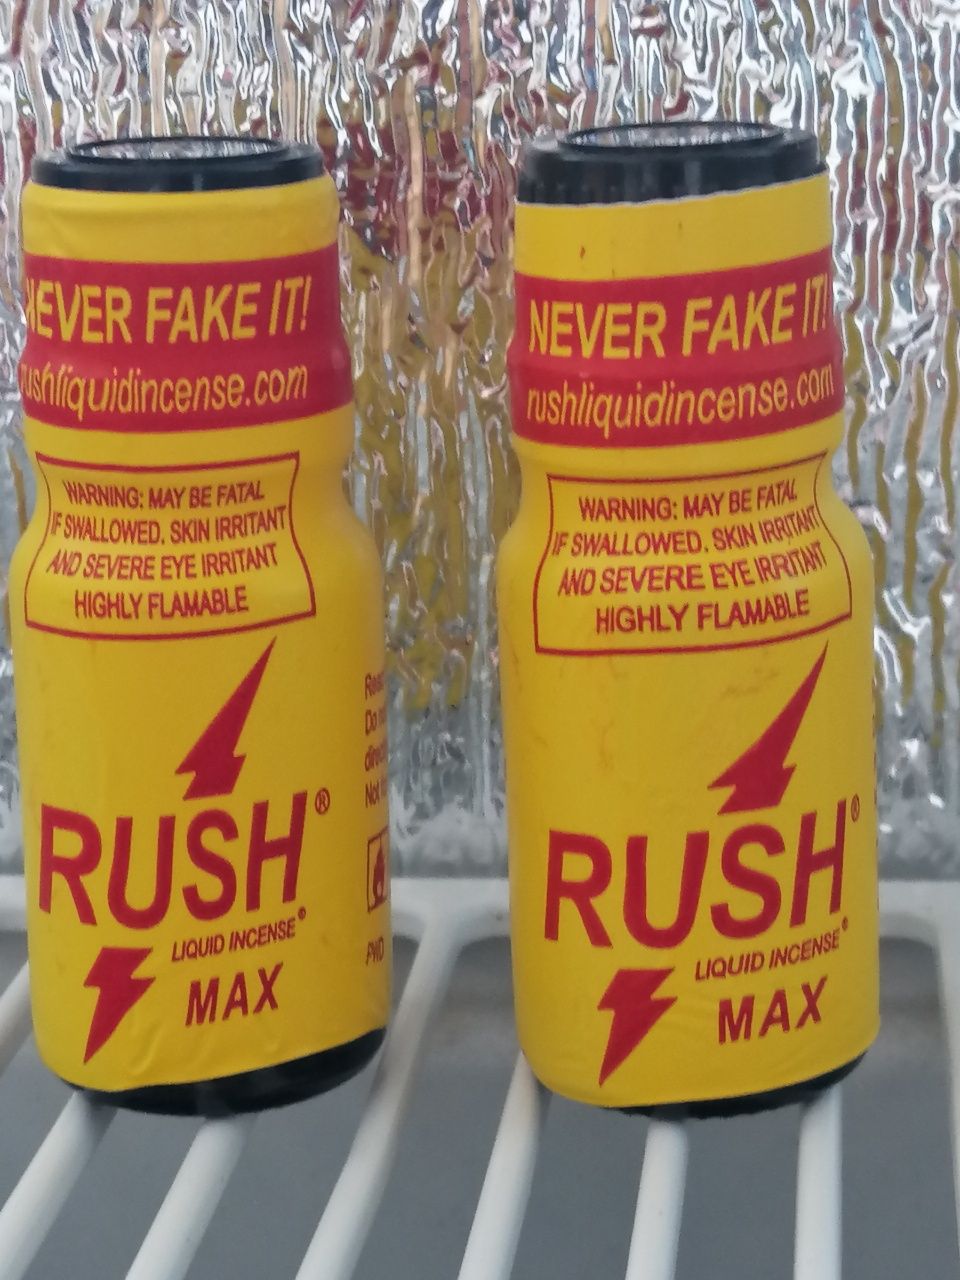 Odorizant afodisiac de camera rush max poppers liquid incense